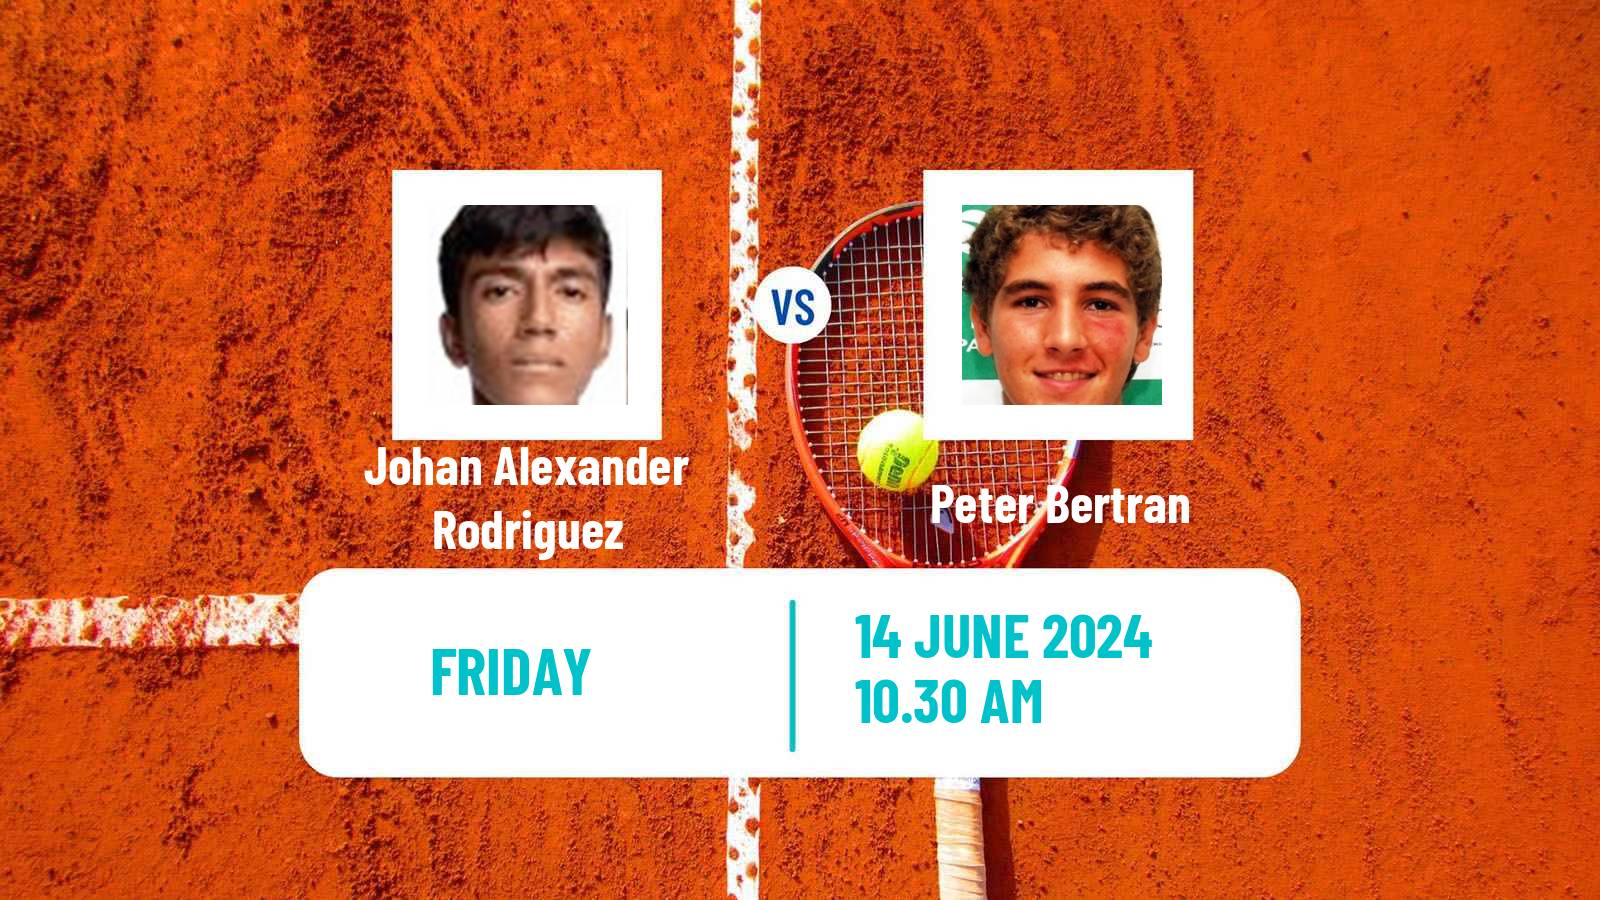 Tennis ITF M15 Santo Domingo 2 Men Johan Alexander Rodriguez - Peter Bertran